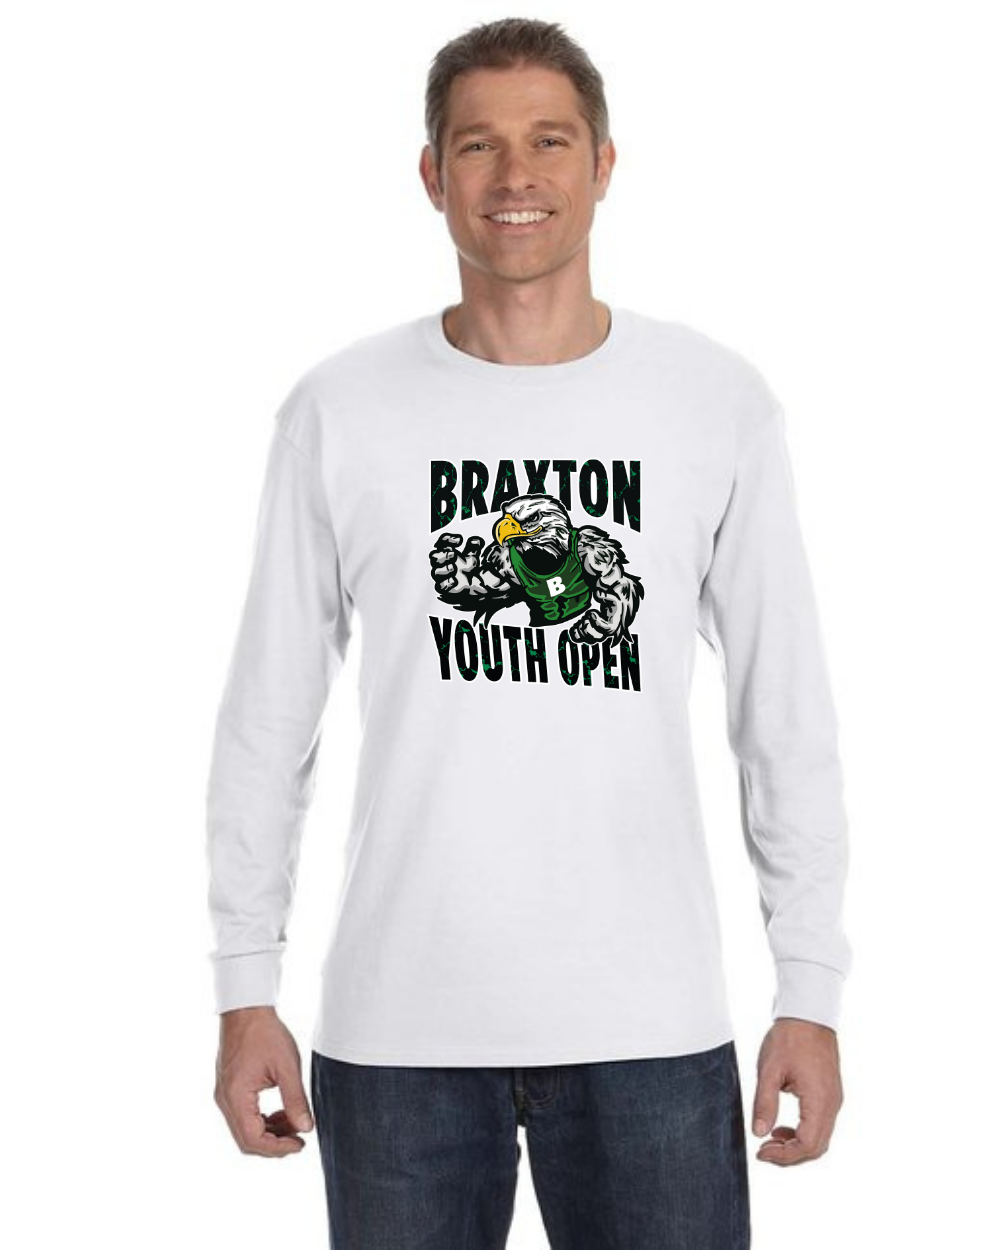 fashionable cotton crew neck clothing Long sleeve T-shirt tee shirt tie dye apparel